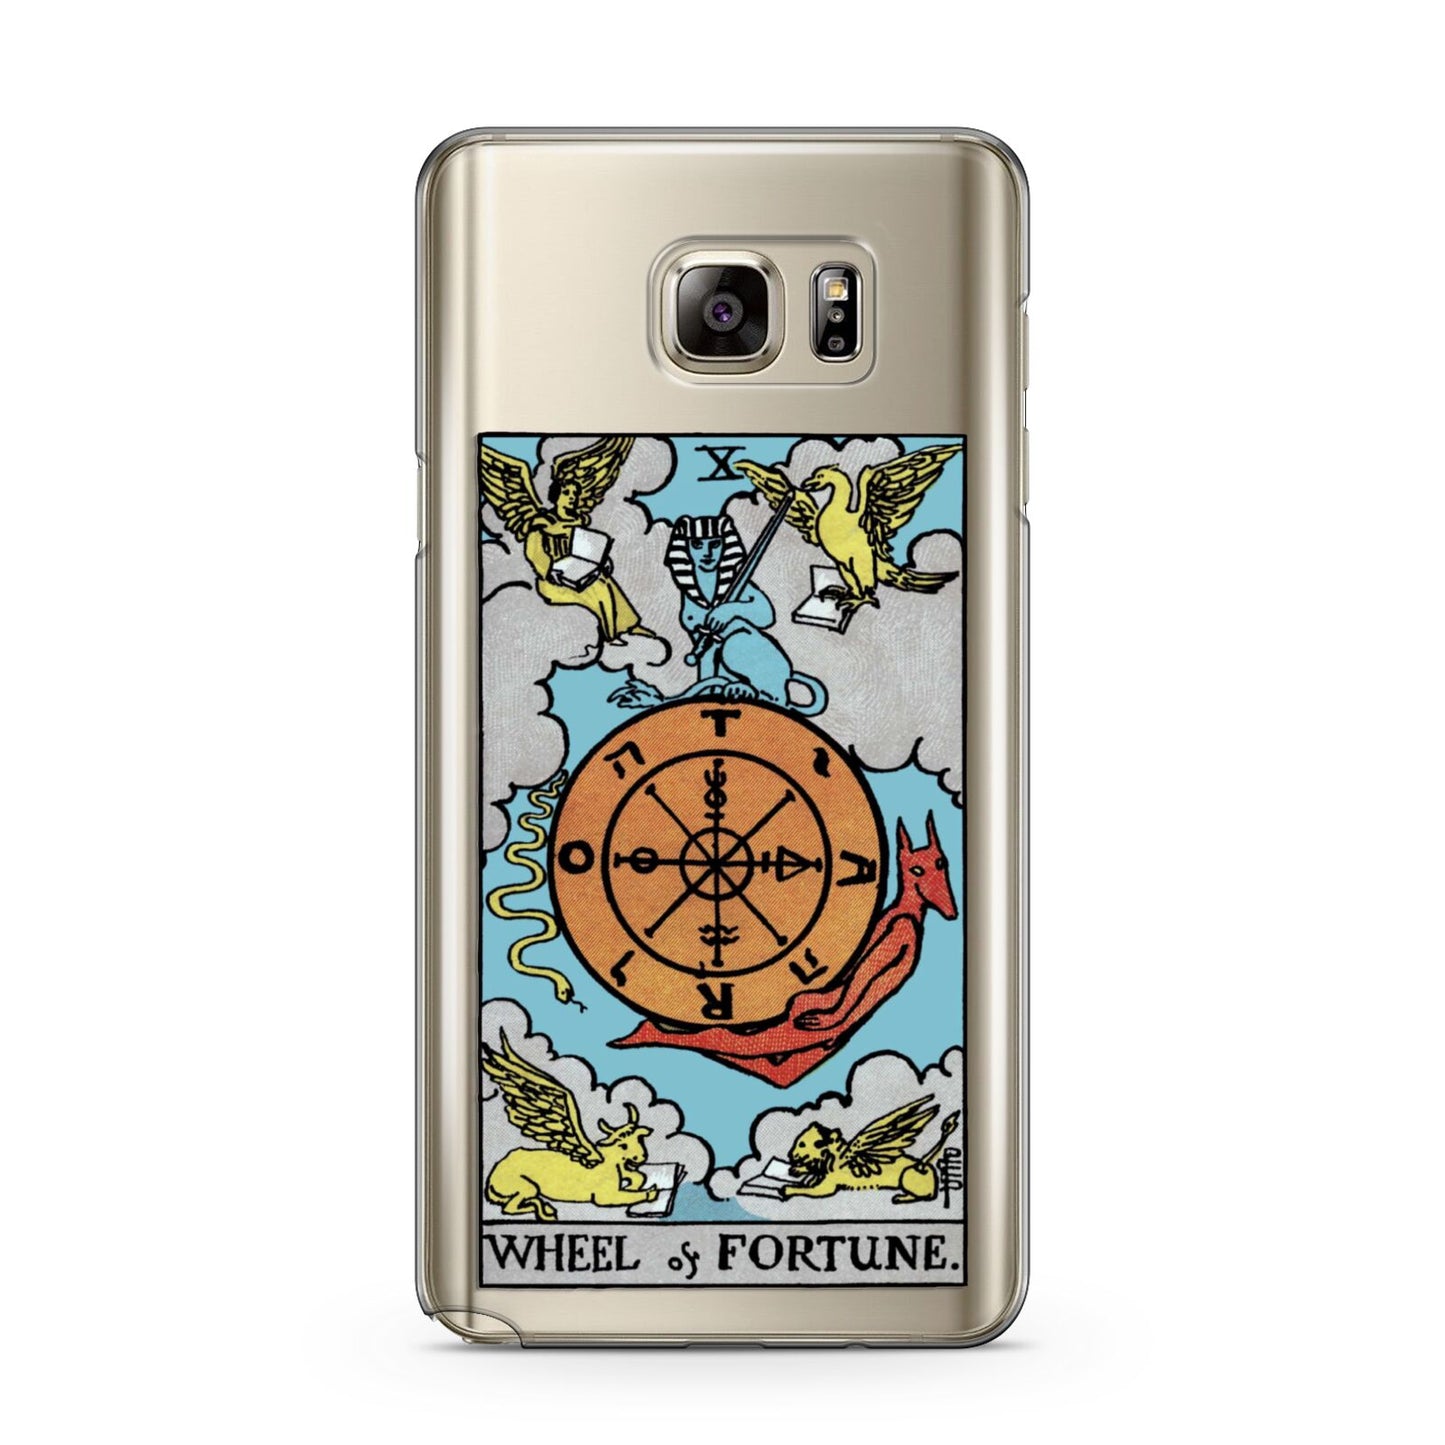 Wheel of Fortune Tarot Card Samsung Galaxy Note 5 Case